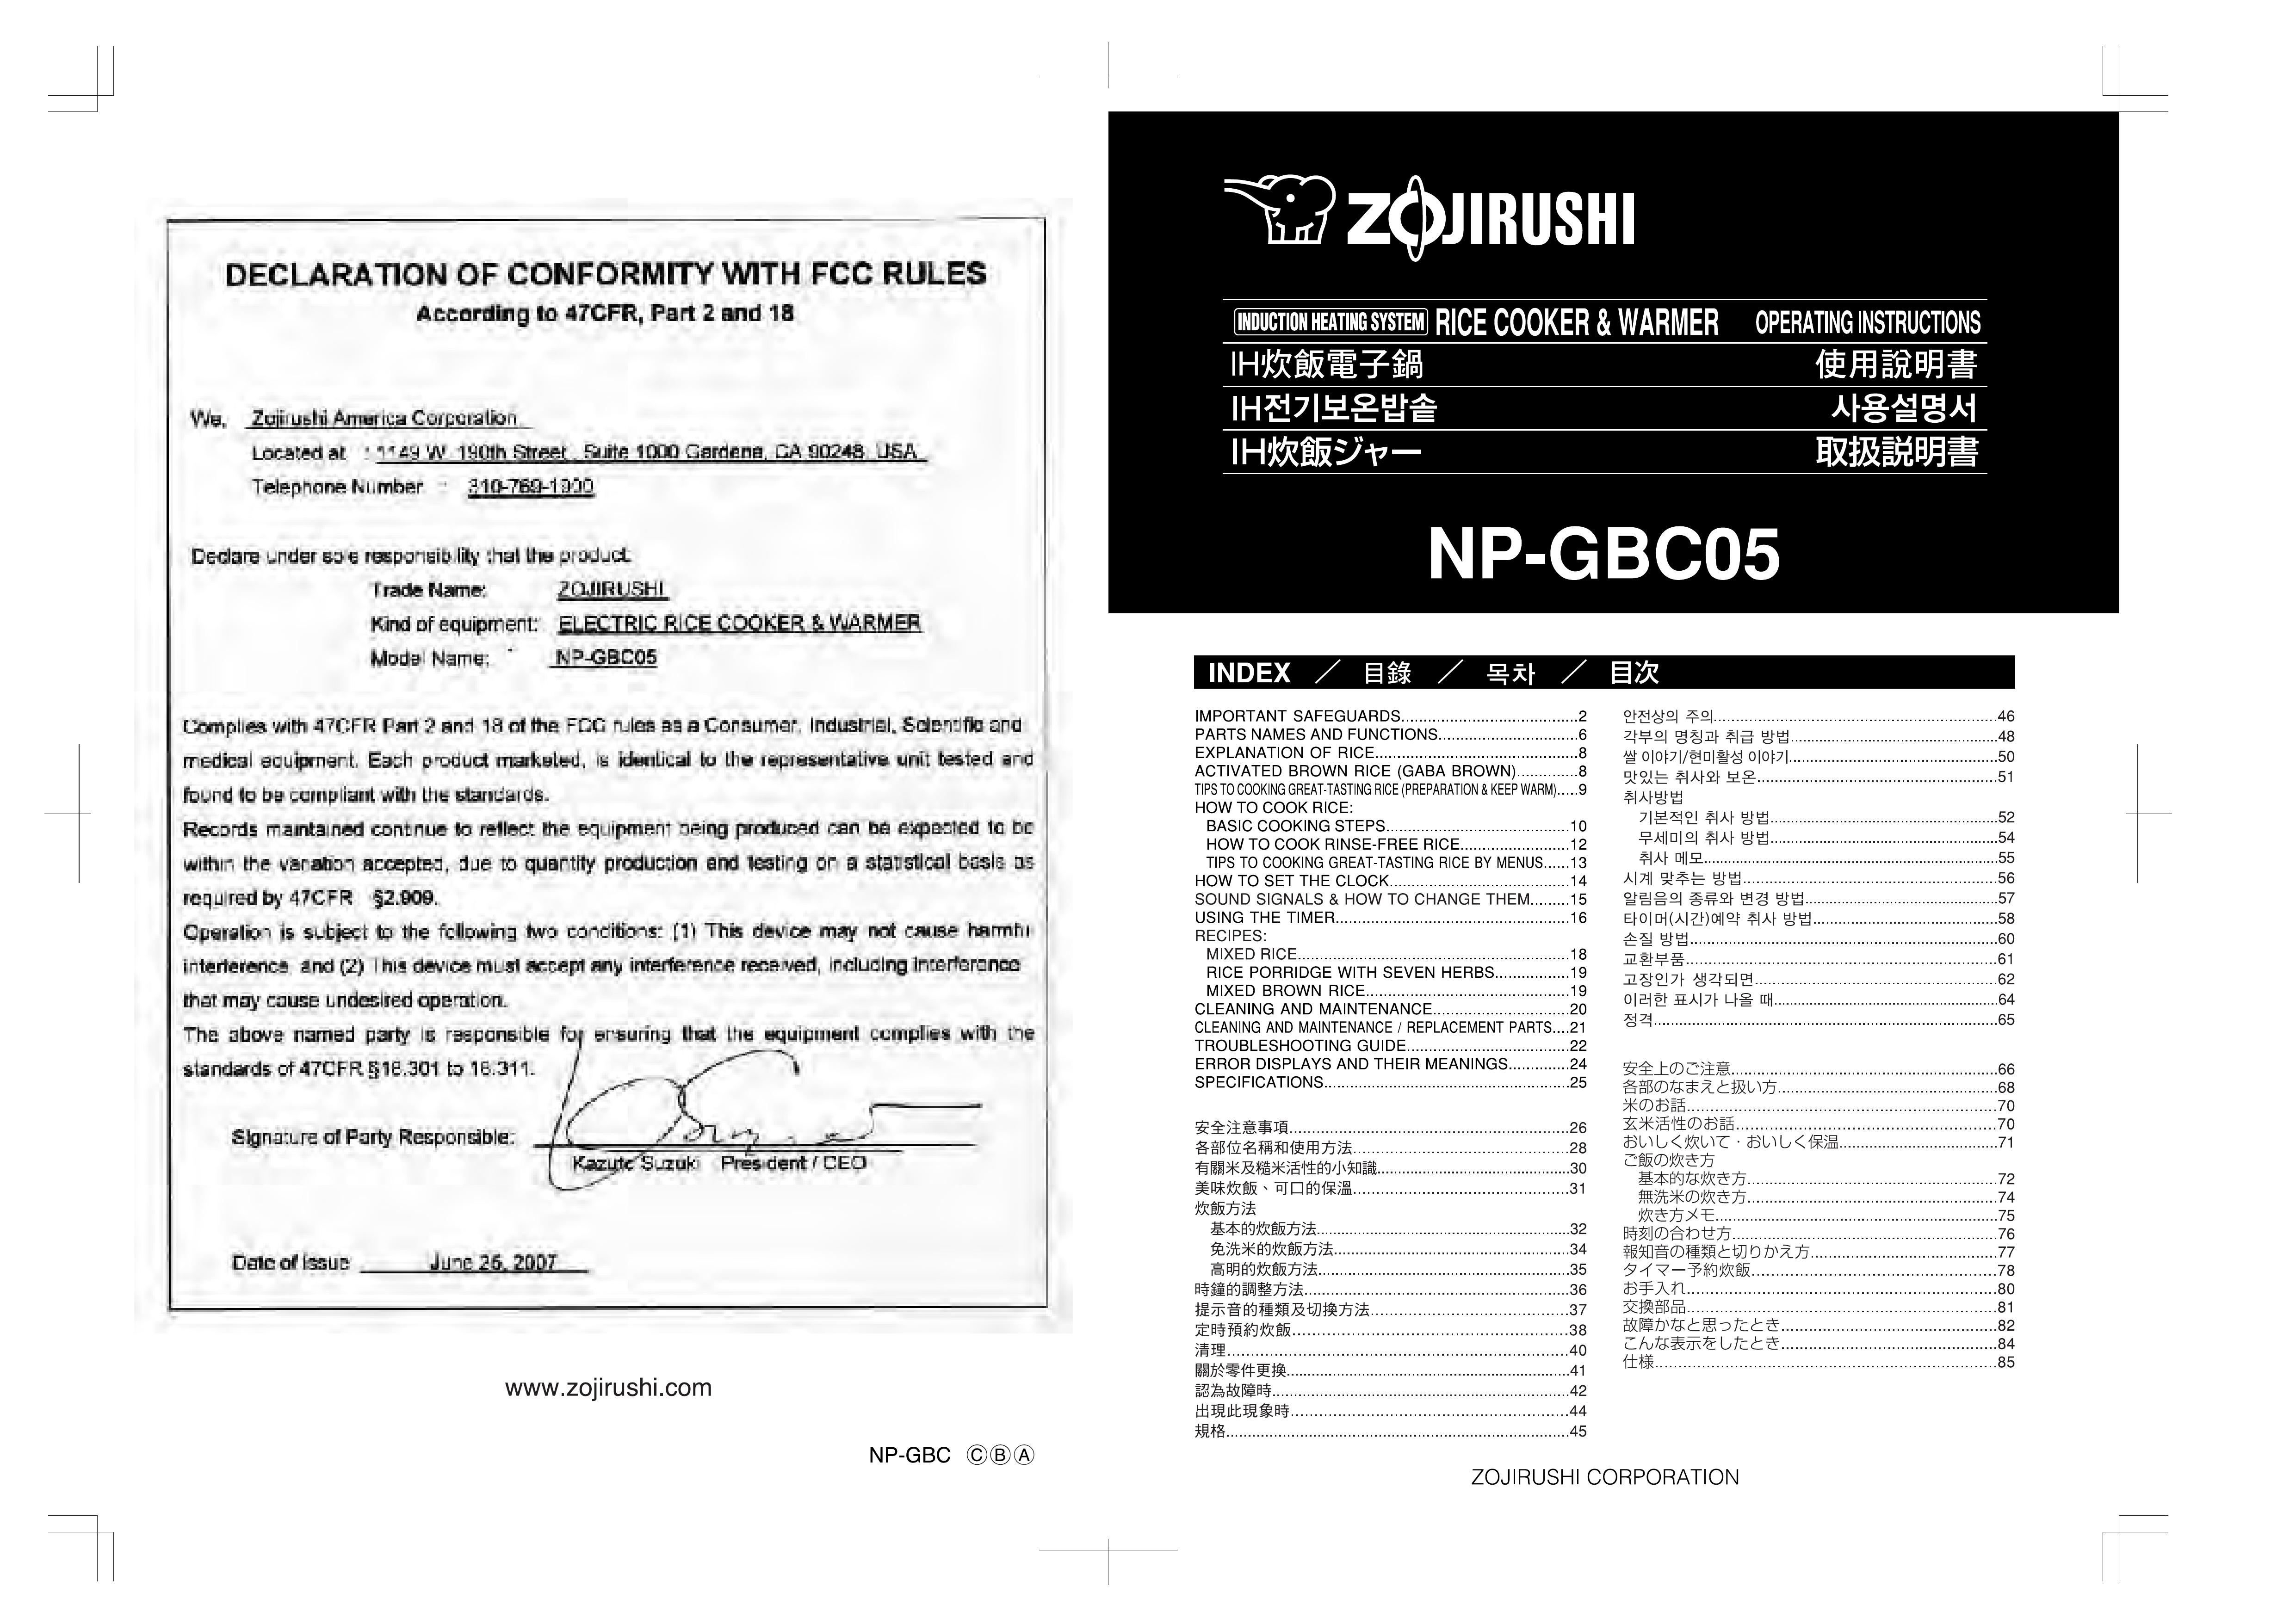 Zojirushi NP-GBC05 Rice Cooker User Manual